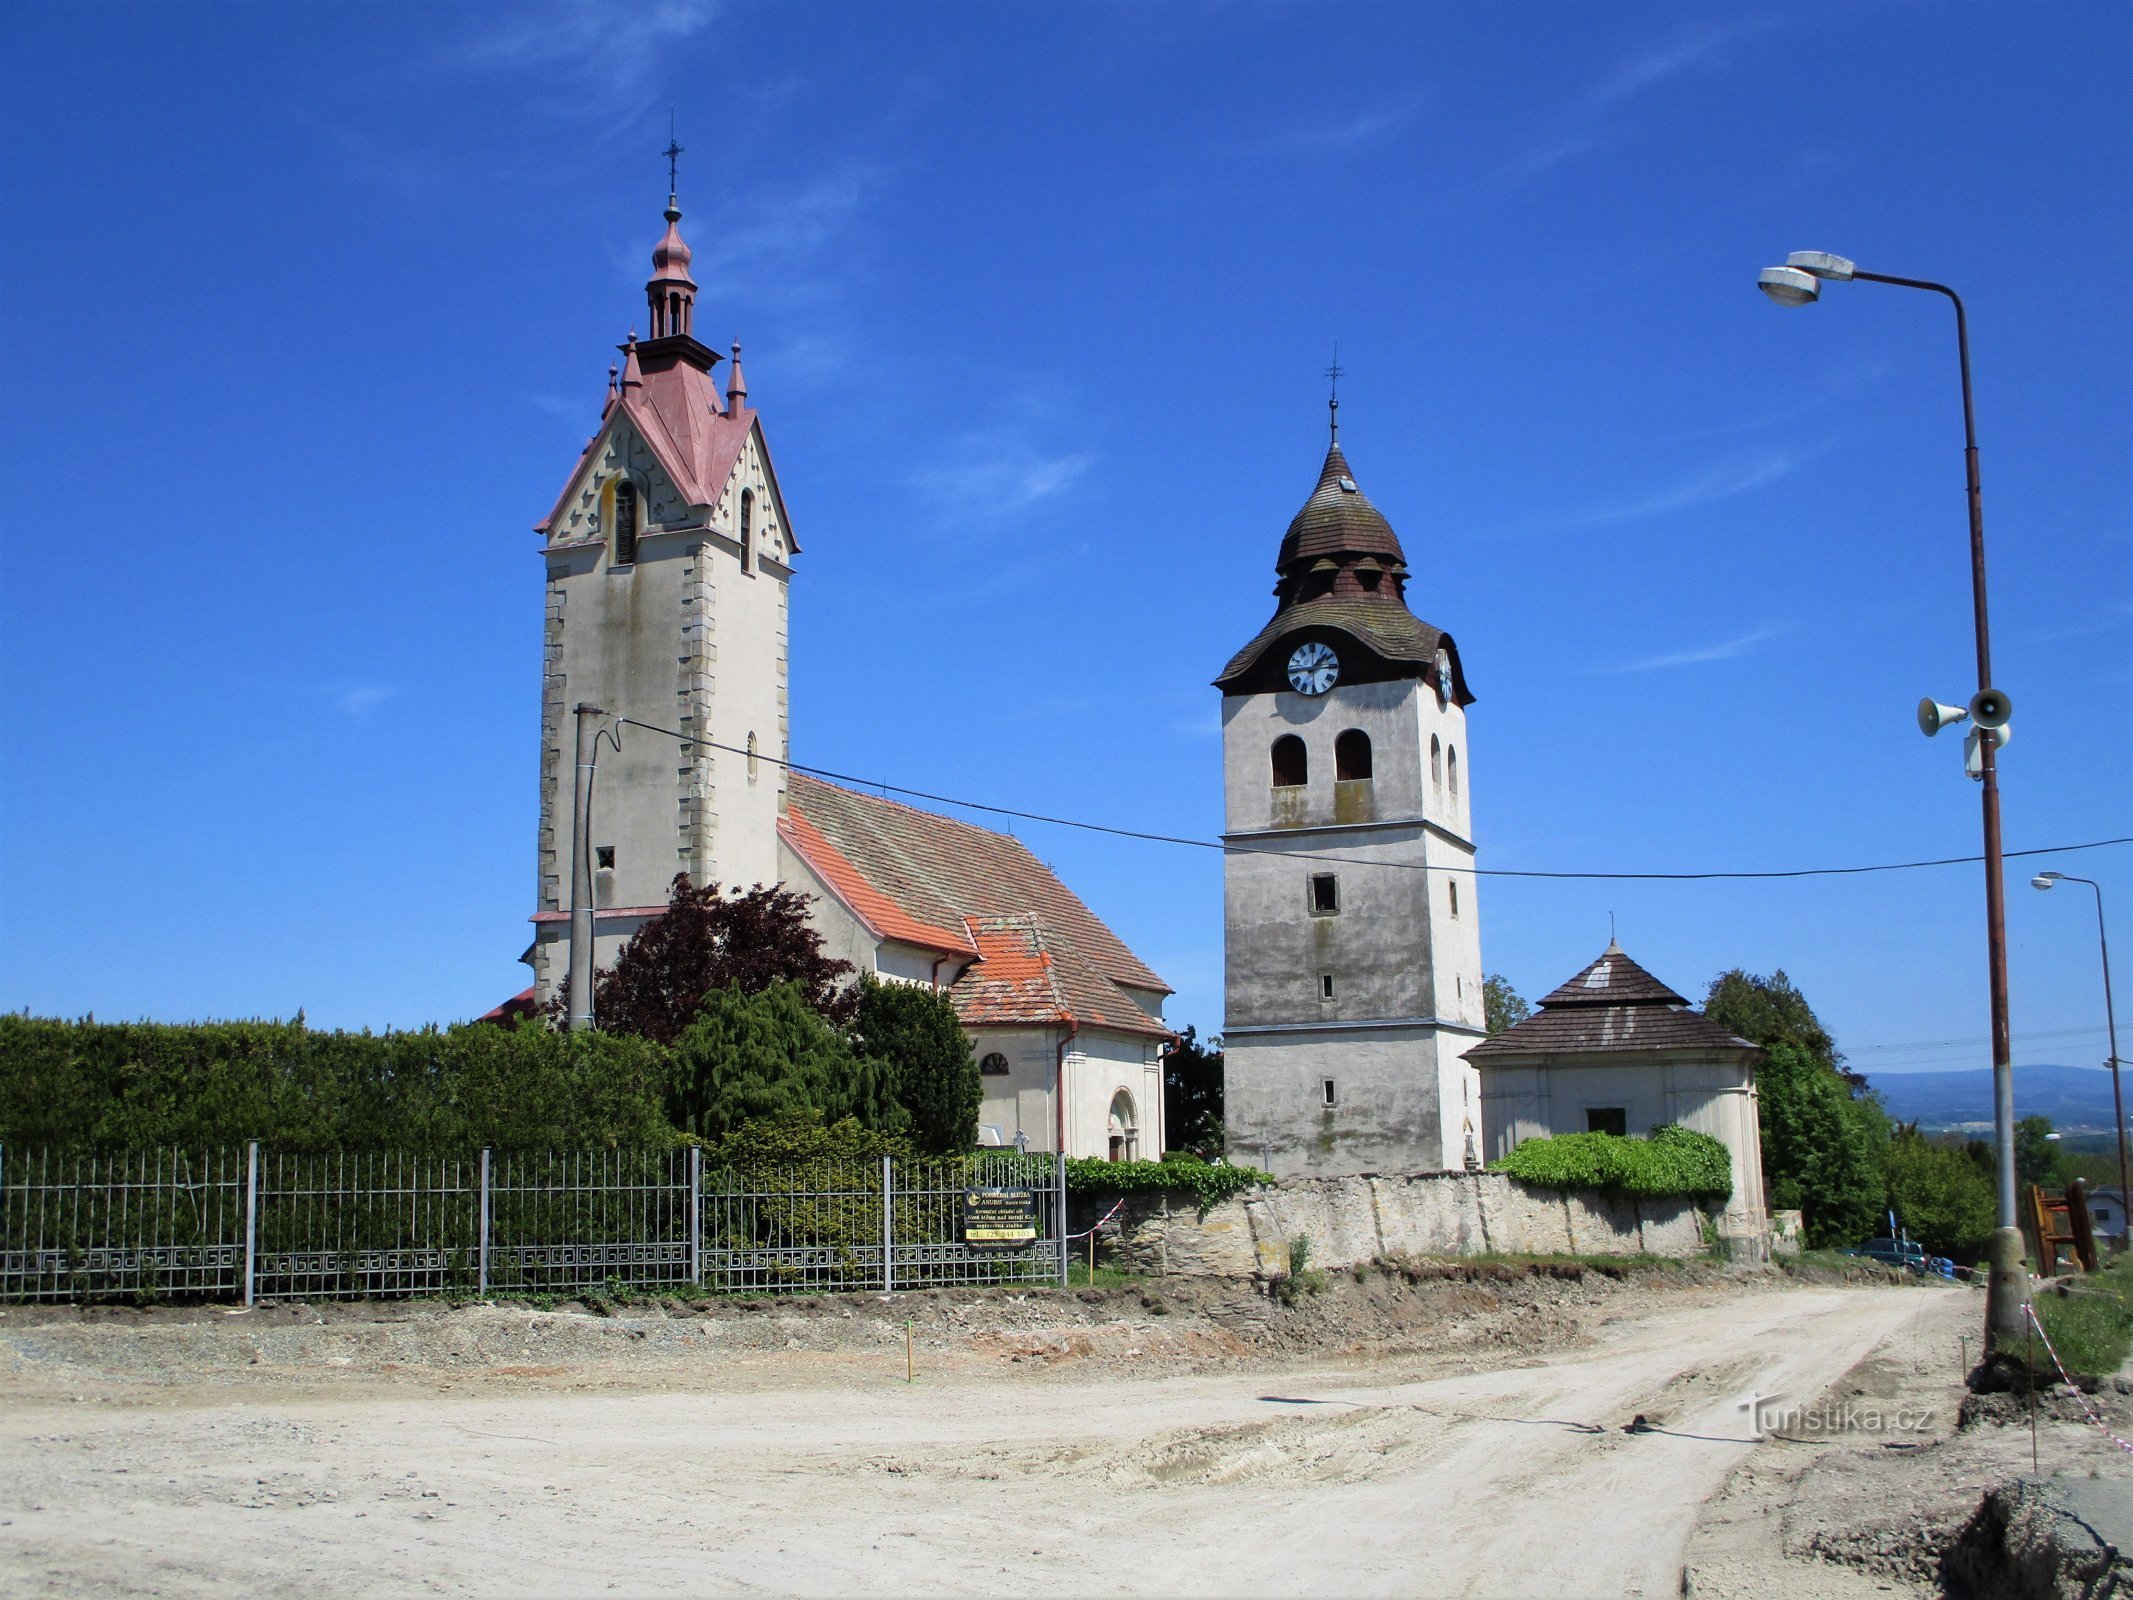 Church of St. Nicholas with the bell tower (Bohuslavice nad Metují, 18.5.2020/XNUMX/XNUMX)